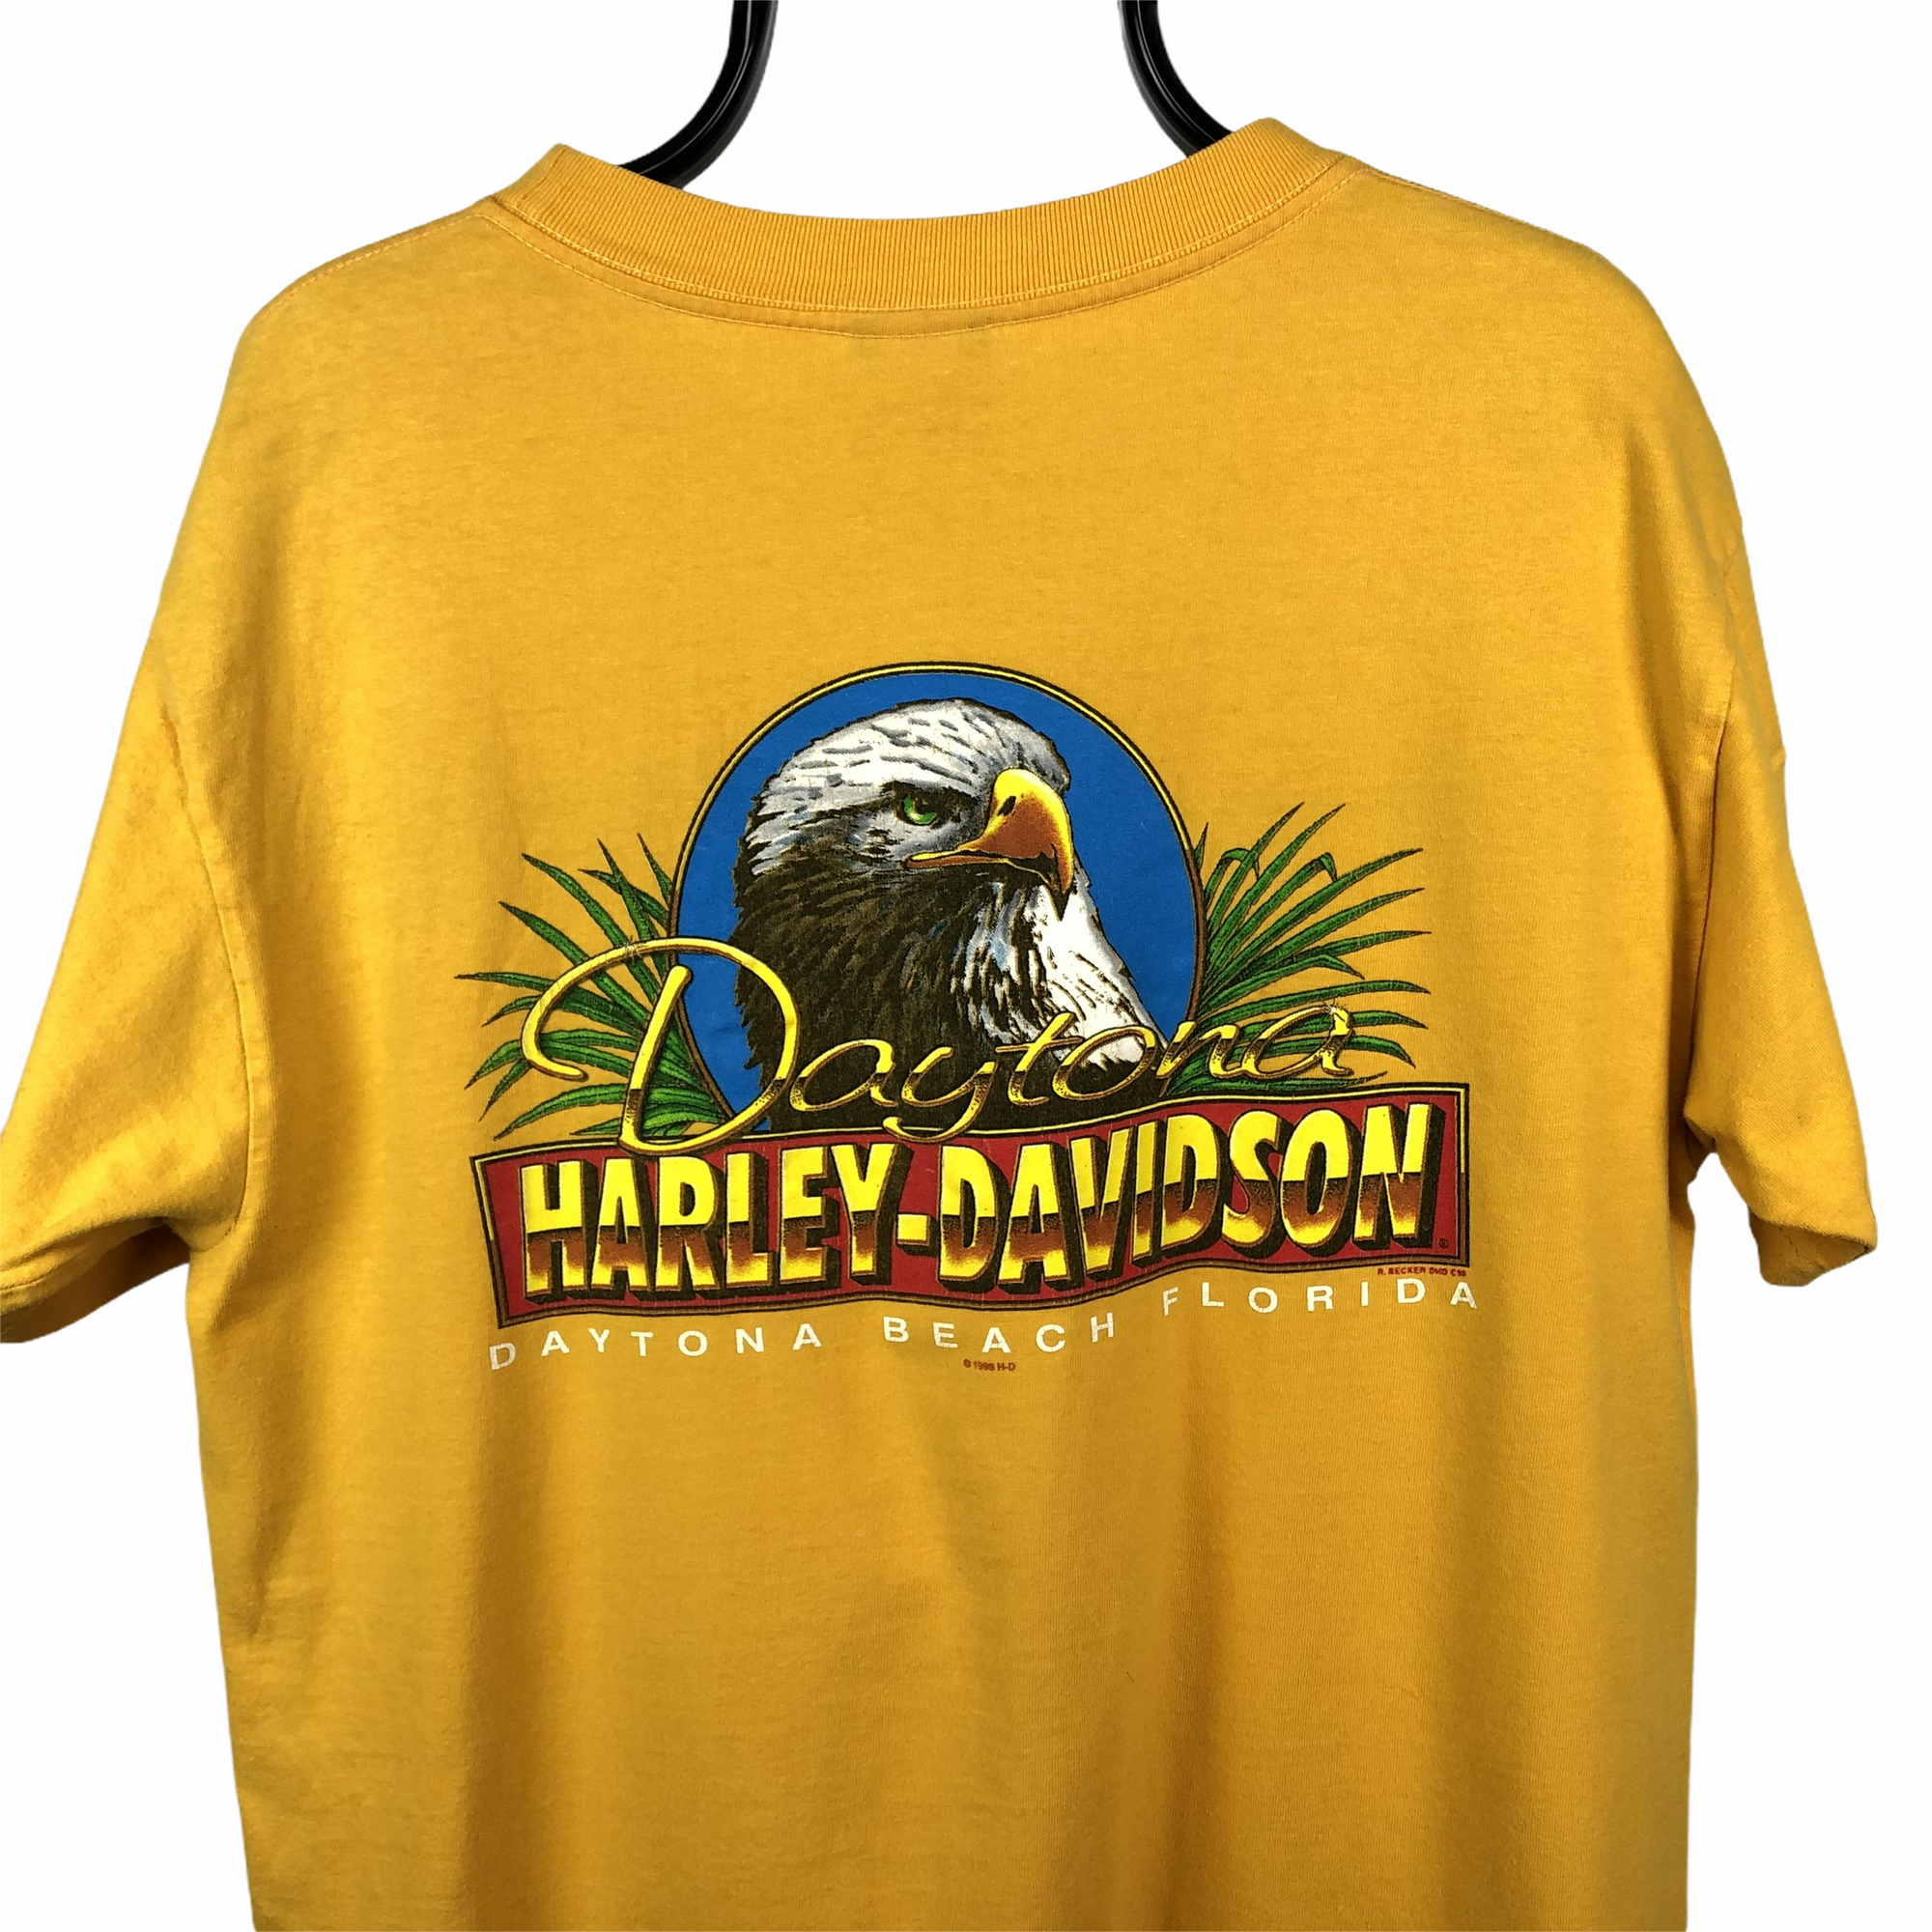 Vintage Harley Davidson Eagle Tee in Yellow - Men's Large/Women's XL